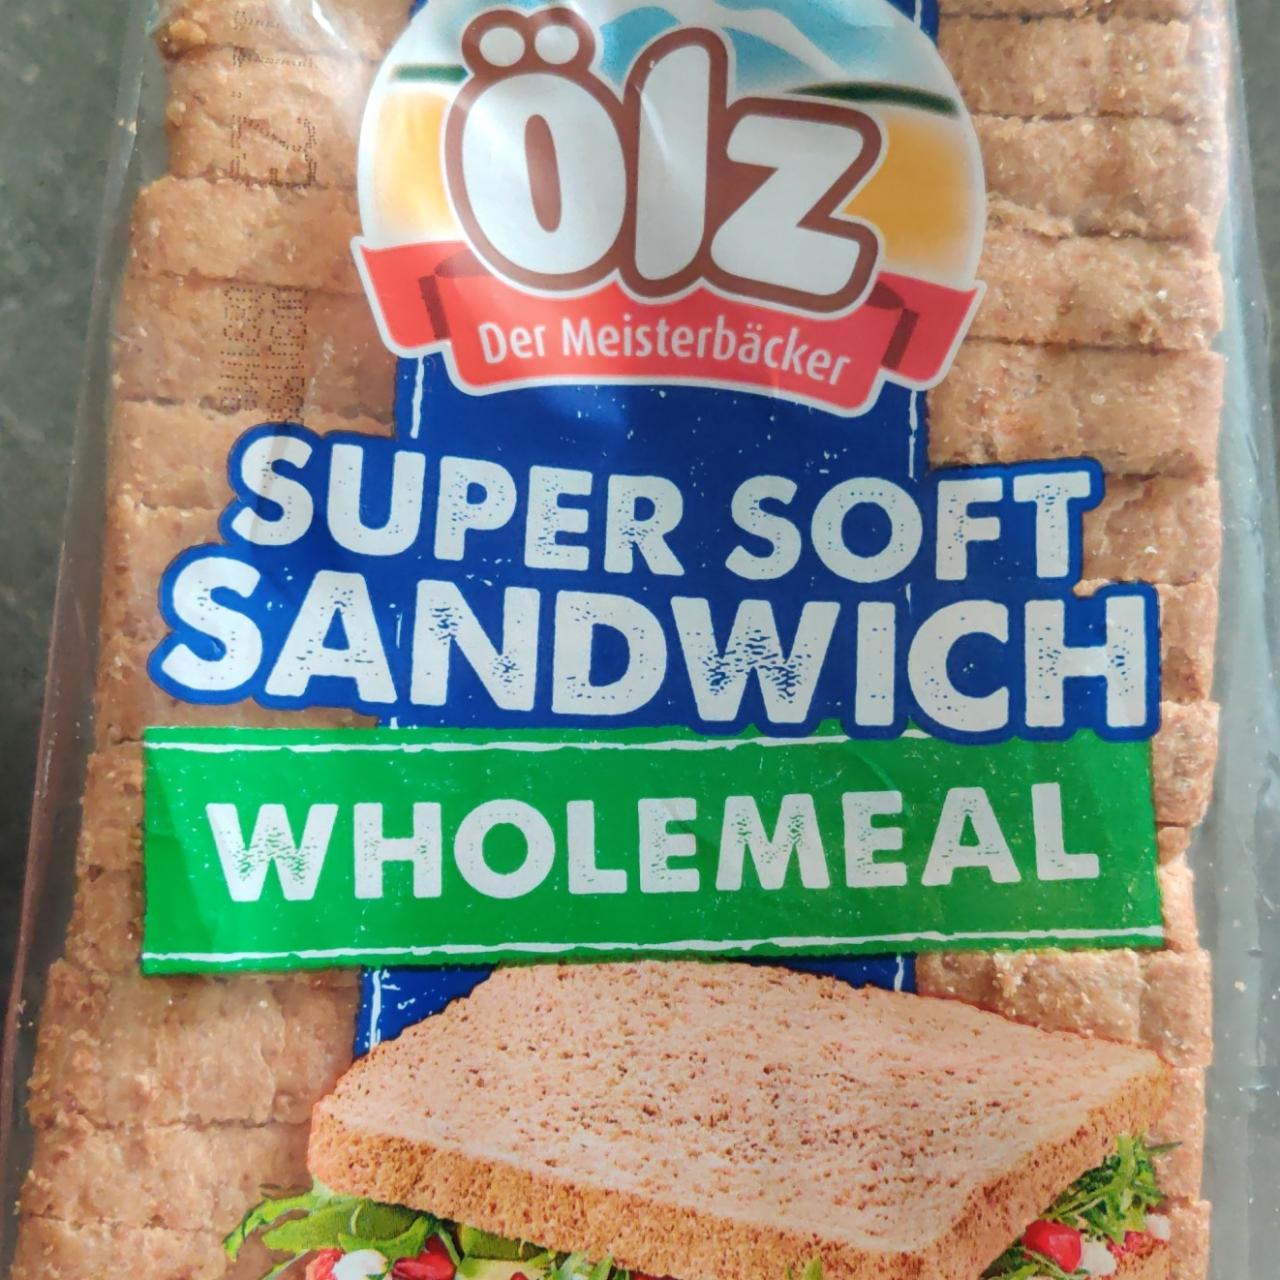 Zdjęcia - Super soft sandwich wholemeak Olz